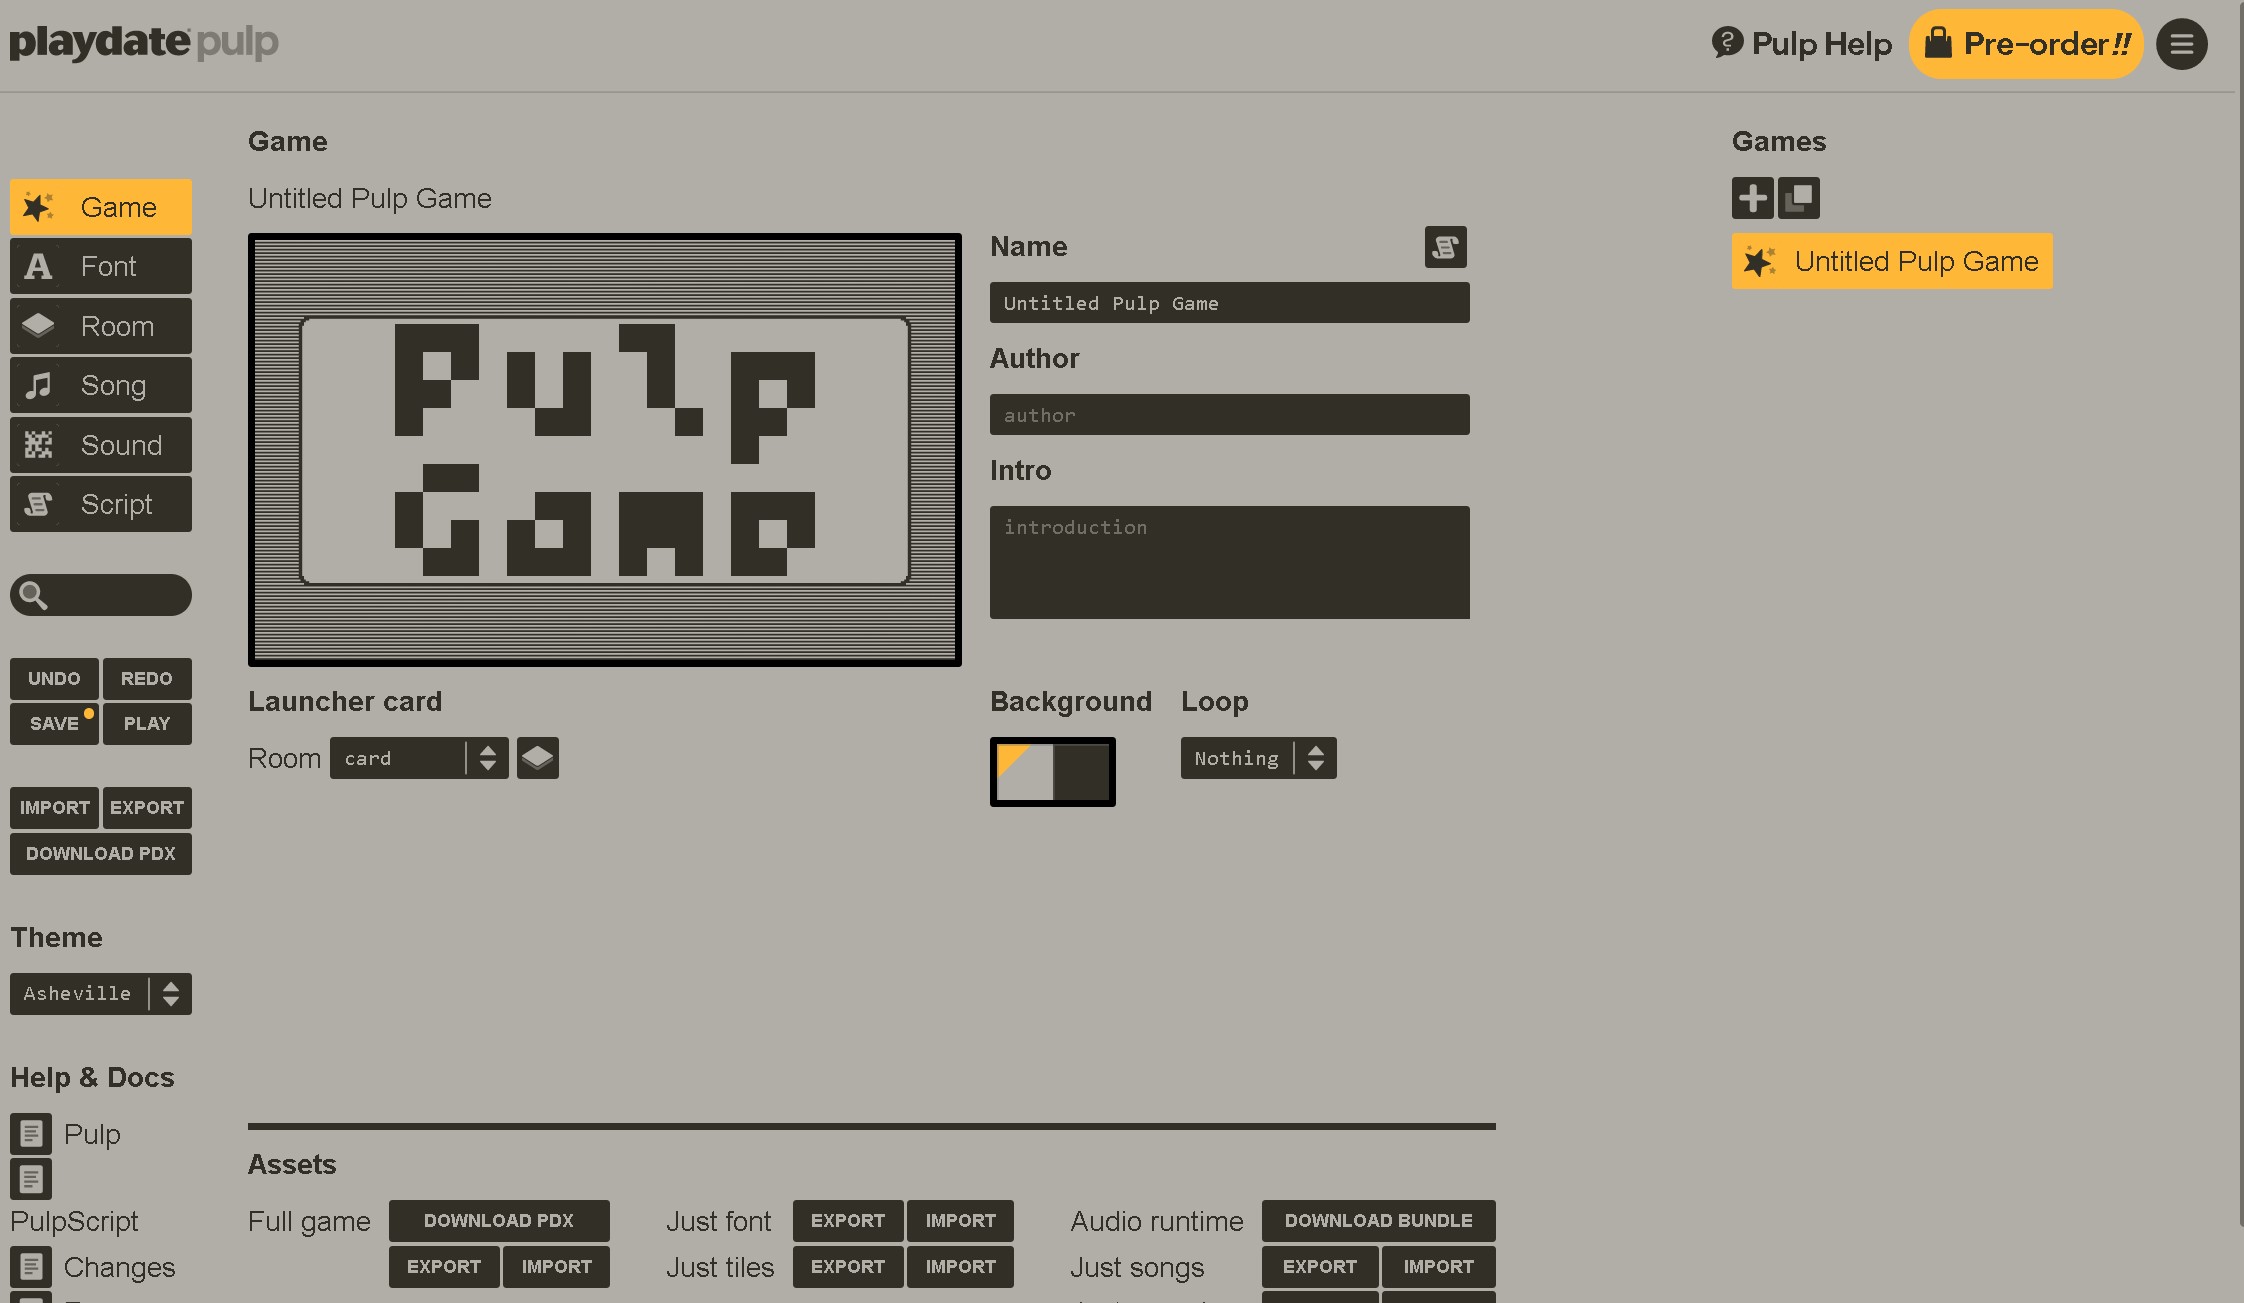 Screenshot of the Playdate Pulp UI